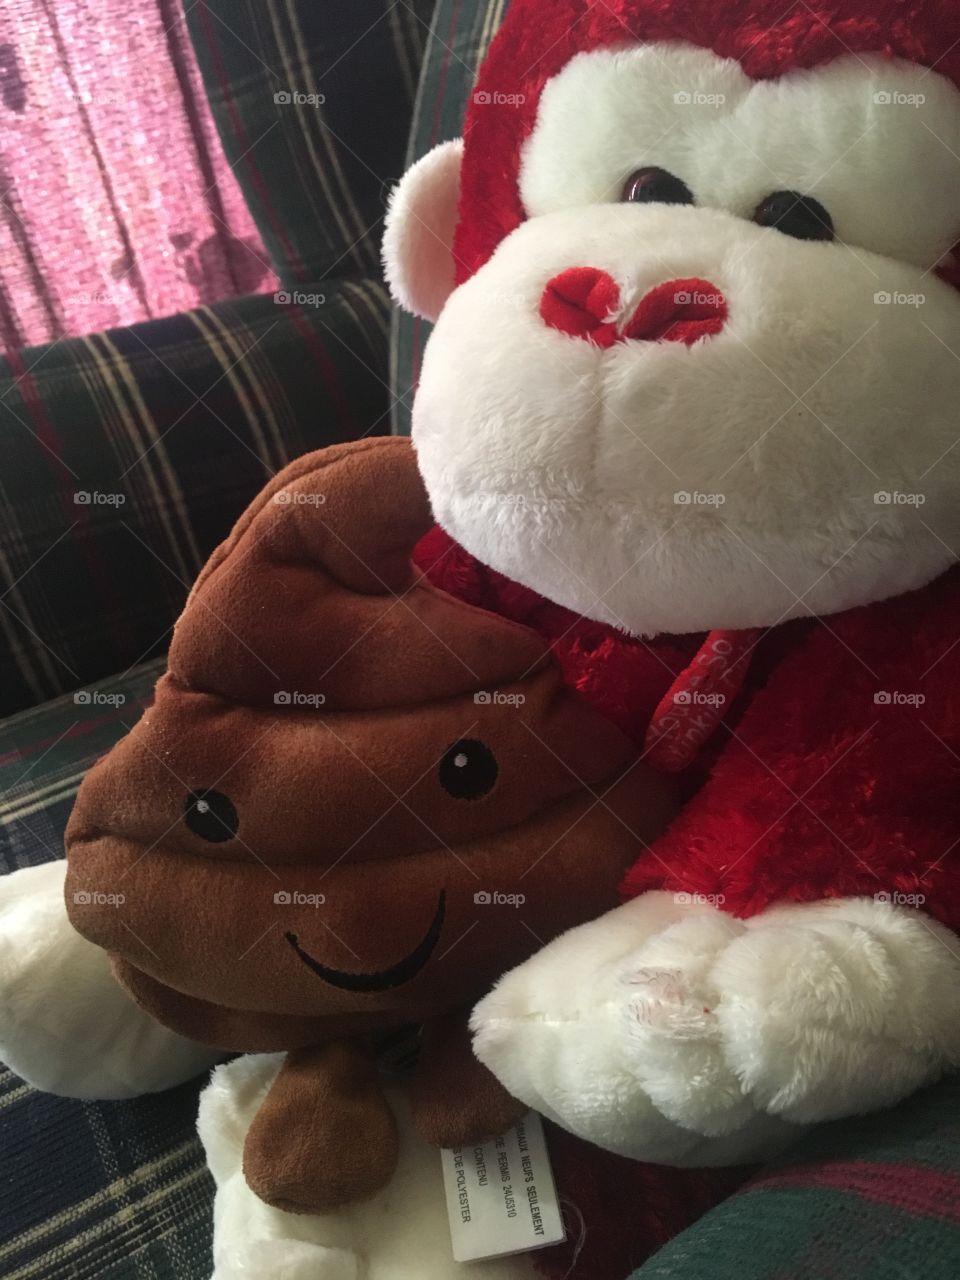 Monkey and poop stuffy